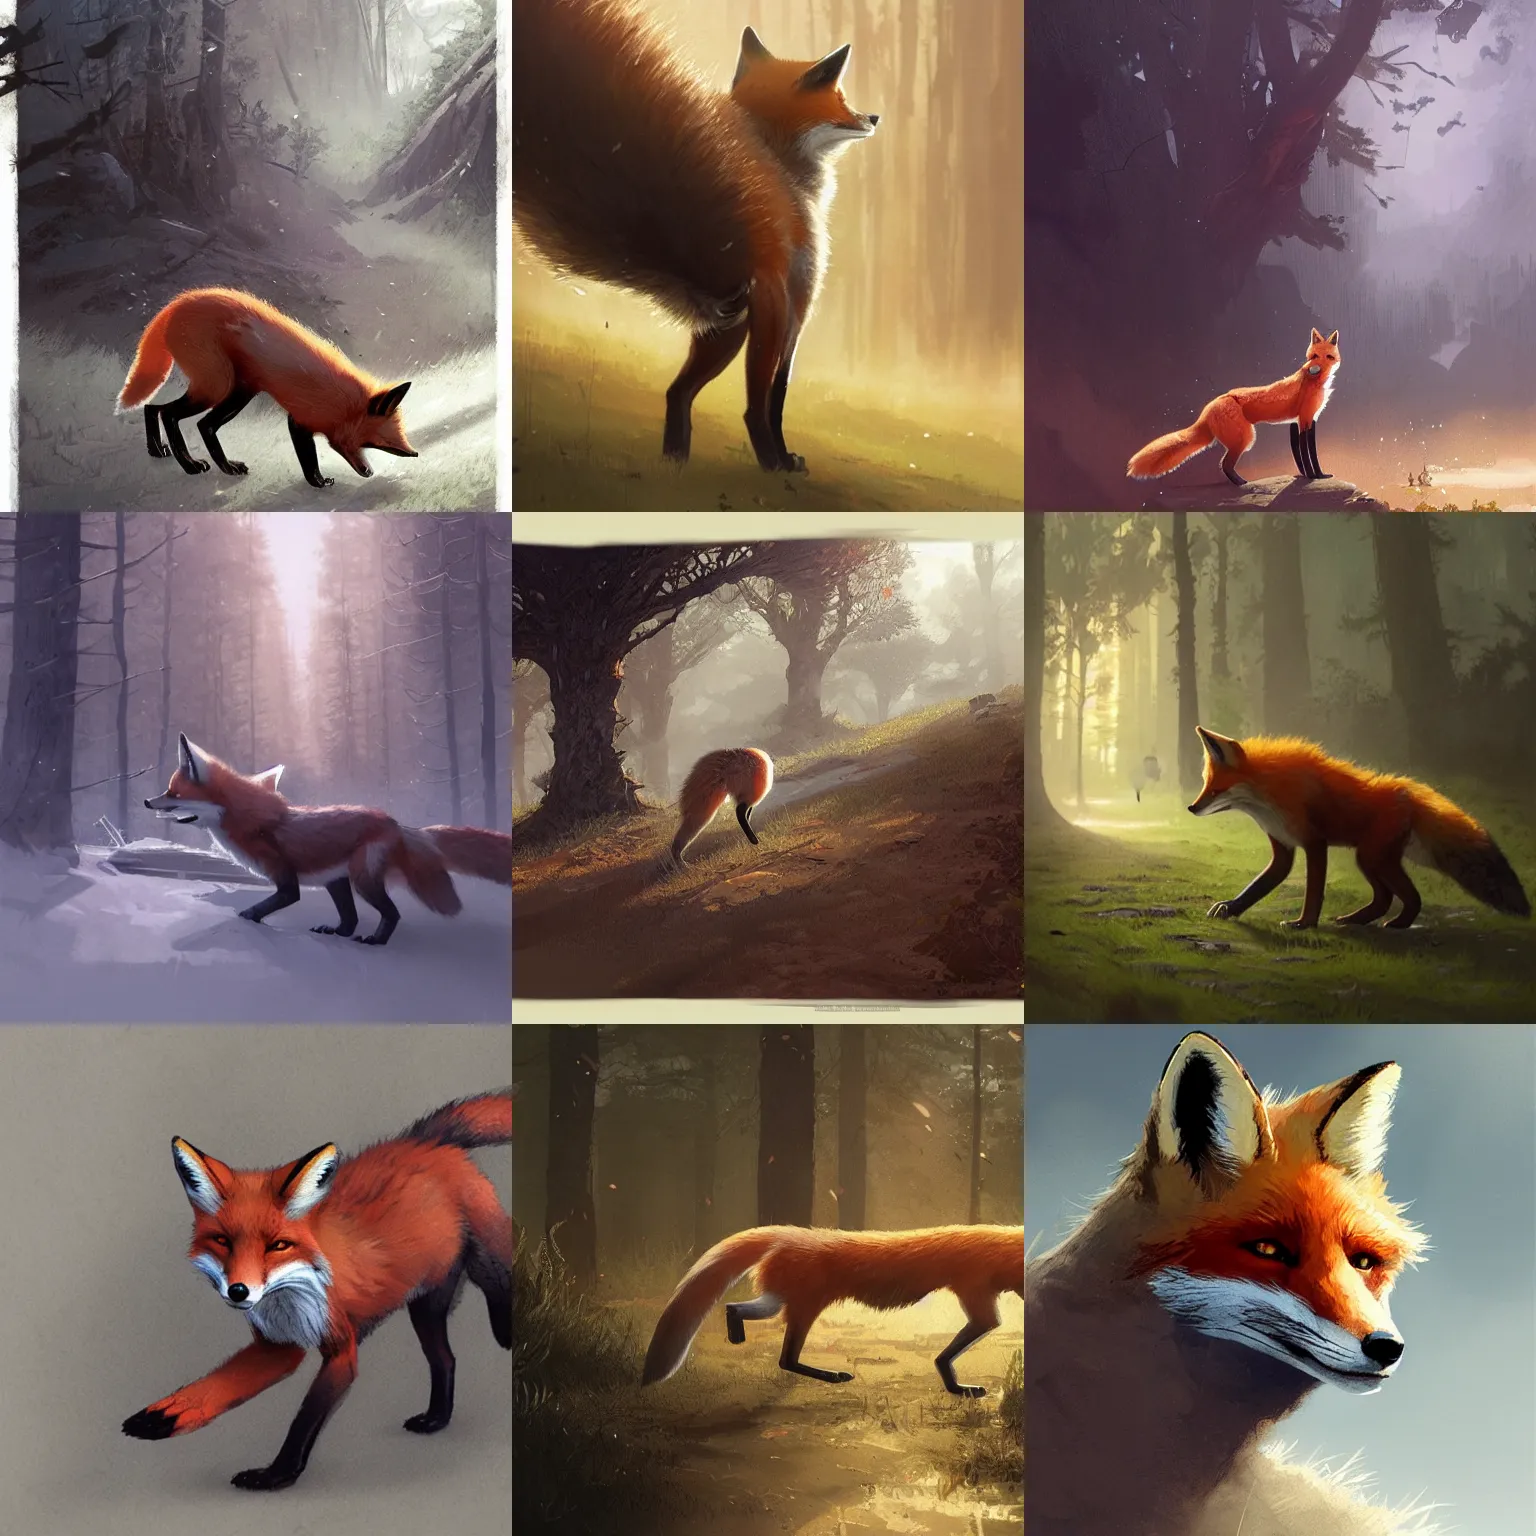 Prompt: a fox, by stanley lau and greg rutkowski, illustration, sharp focus